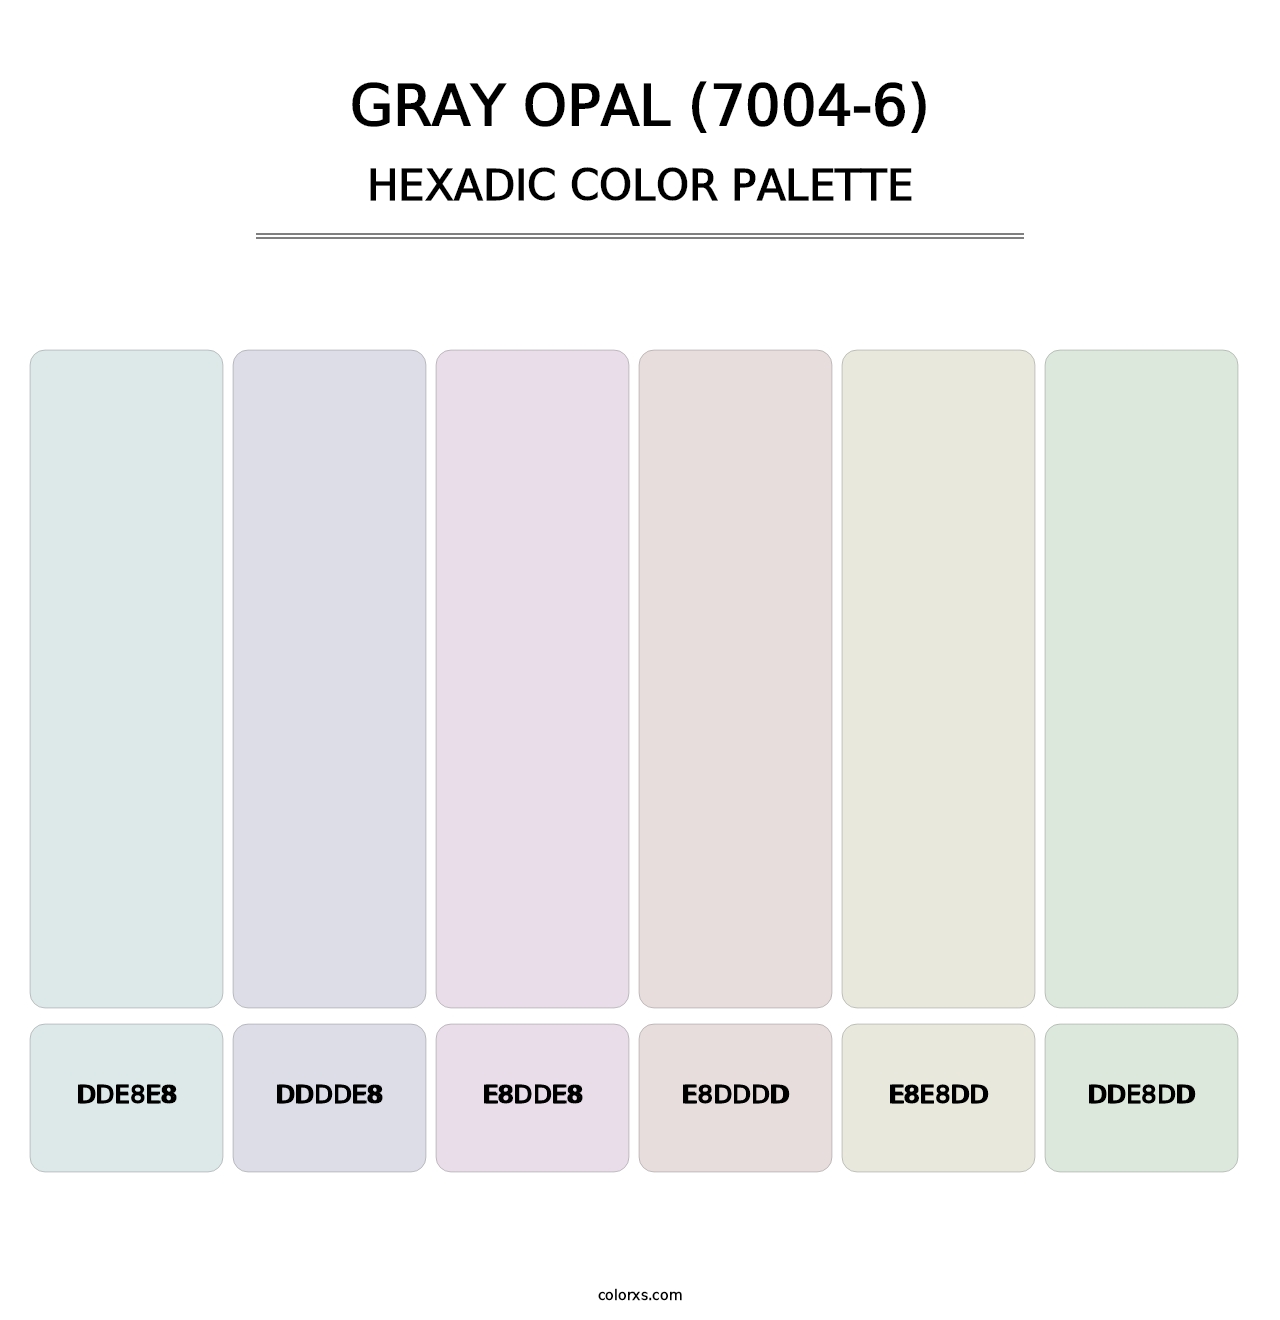 Gray Opal (7004-6) - Hexadic Color Palette